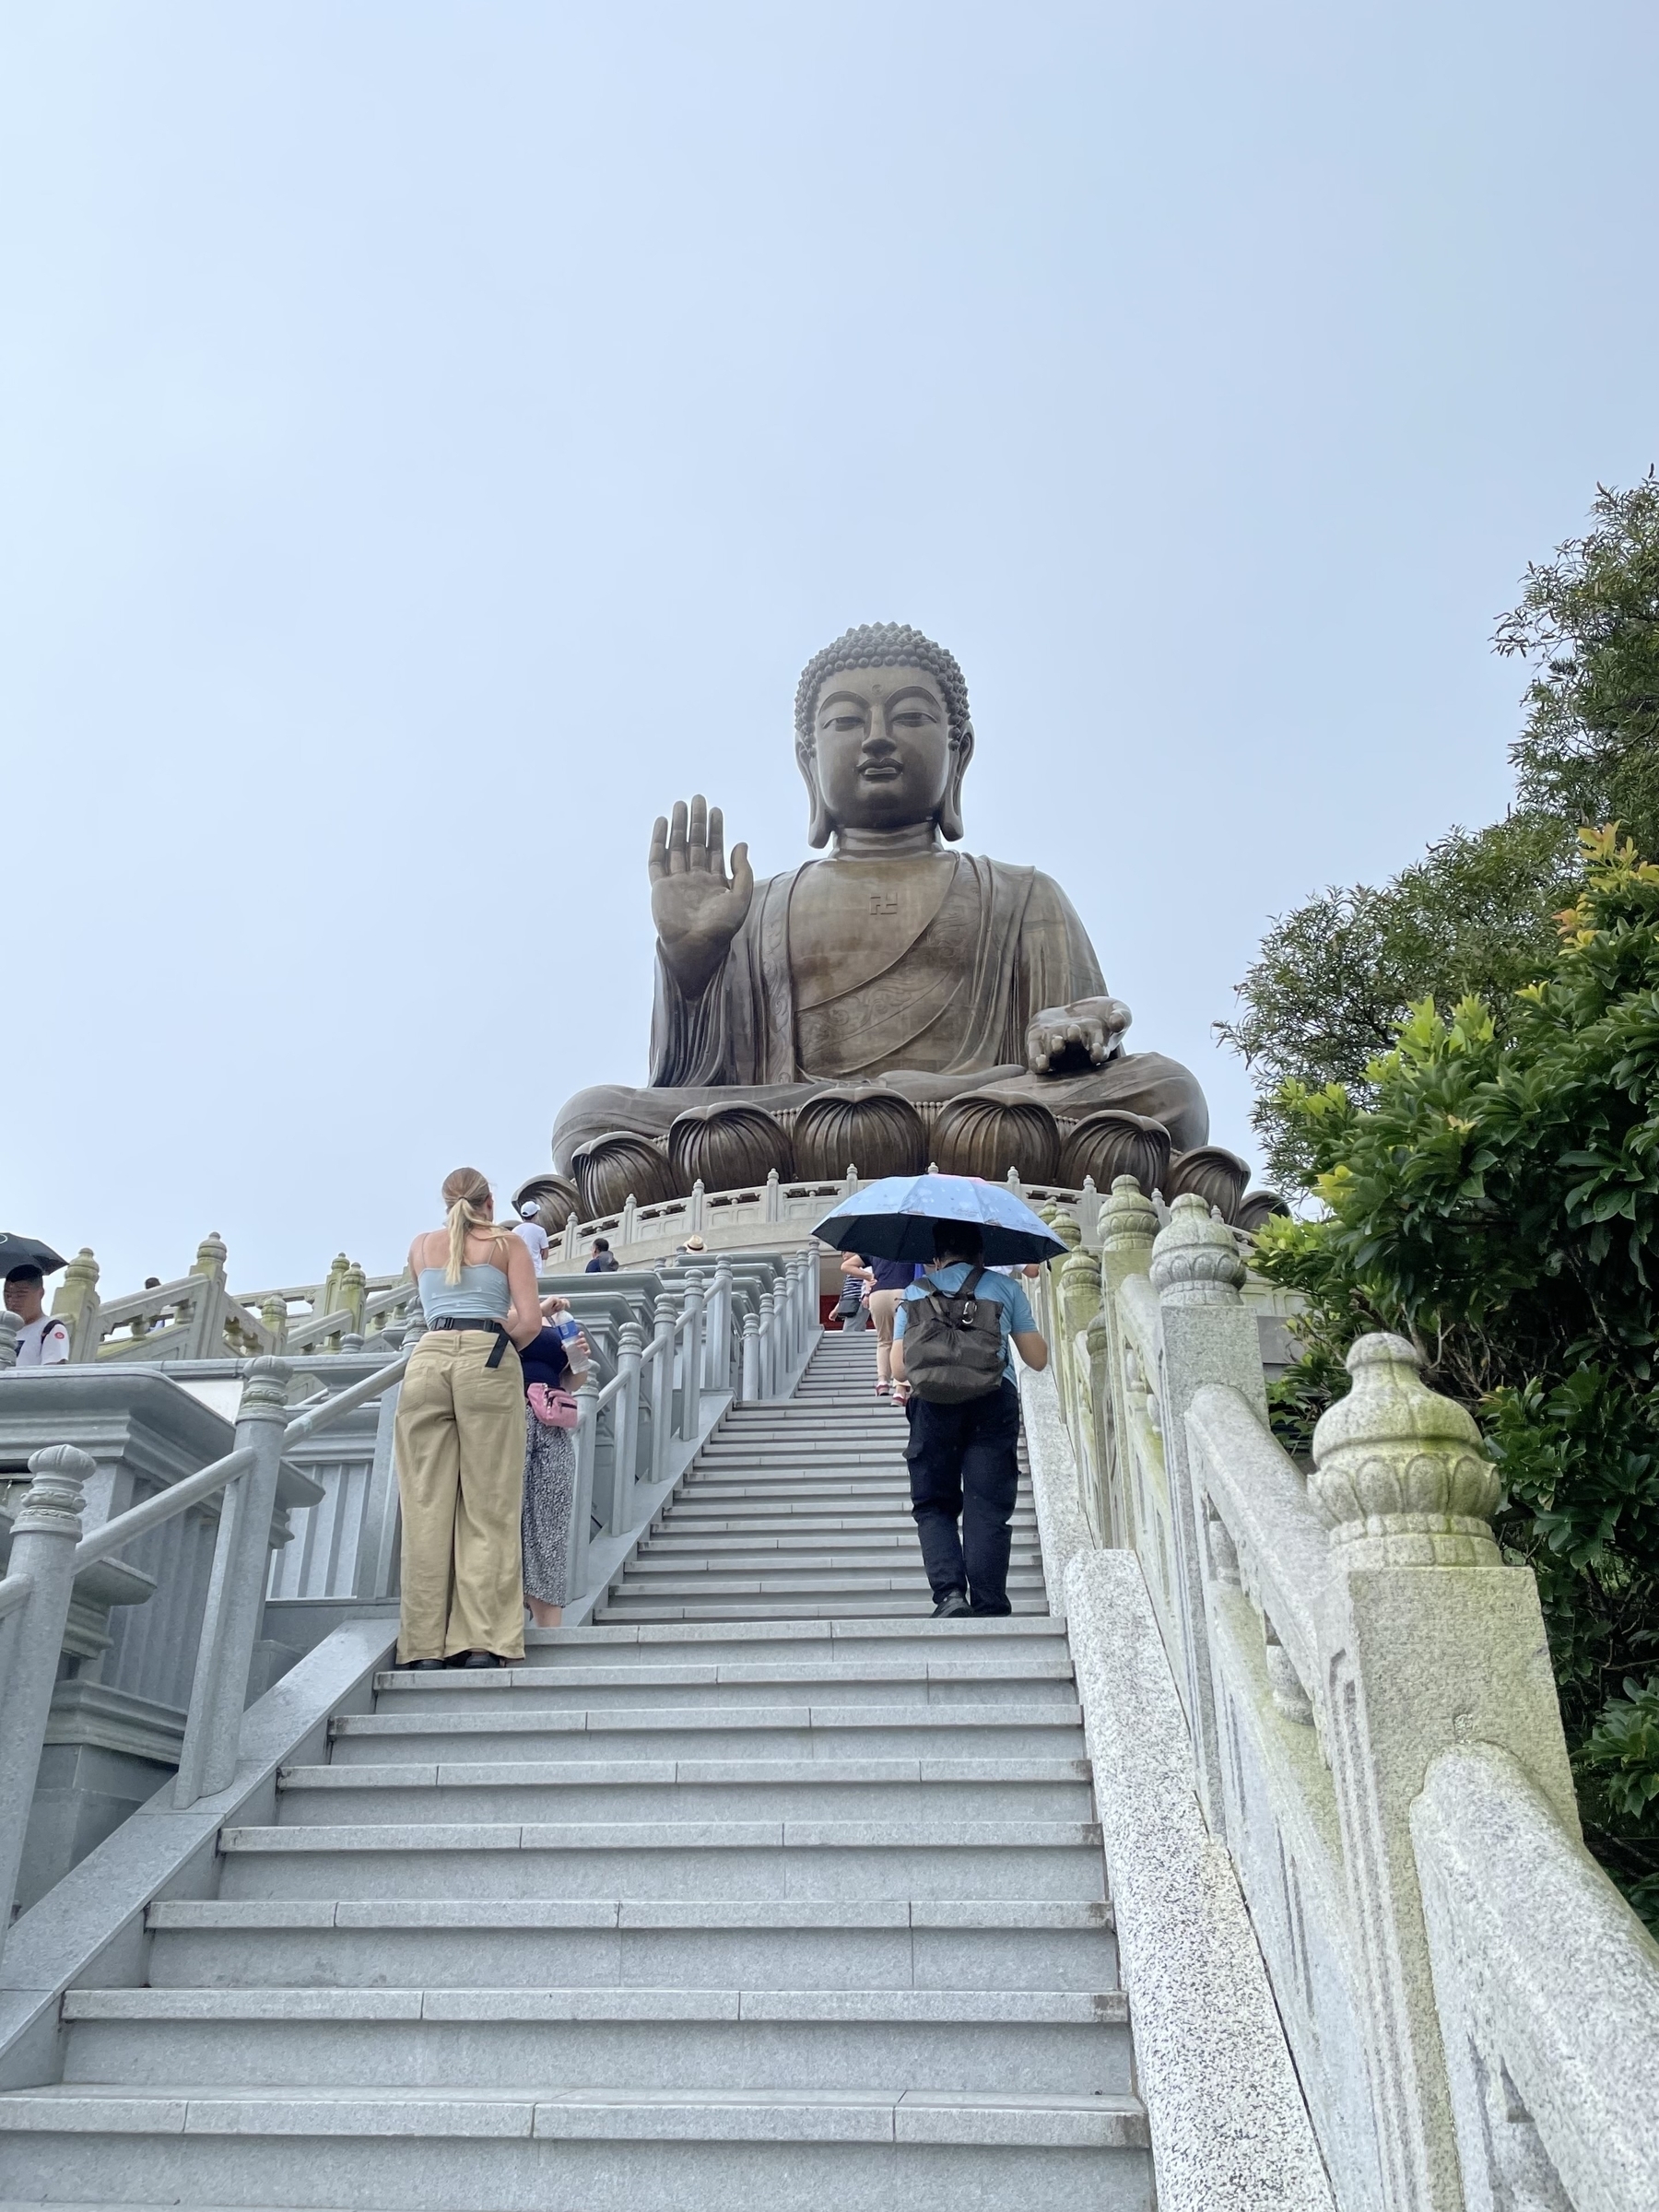 Climbing 256 steps to get close to the Tian Tan Buddha